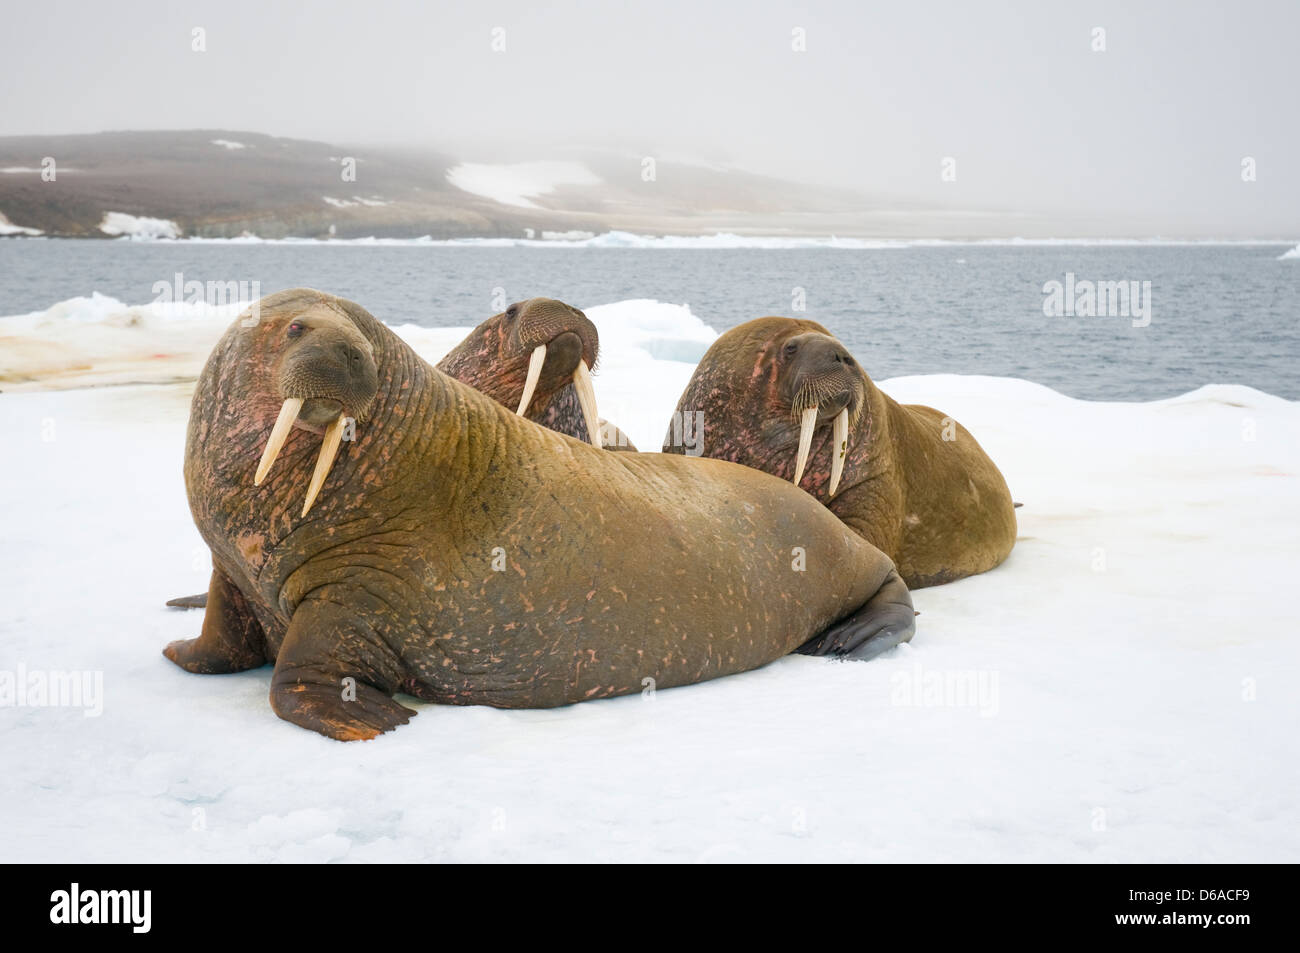 Greenland Sea, Norway, Svalbard Archipelago, Spitsbergen. Walrus, Odobenus rosmarus, group of adults rest on floating sea ice Stock Photo